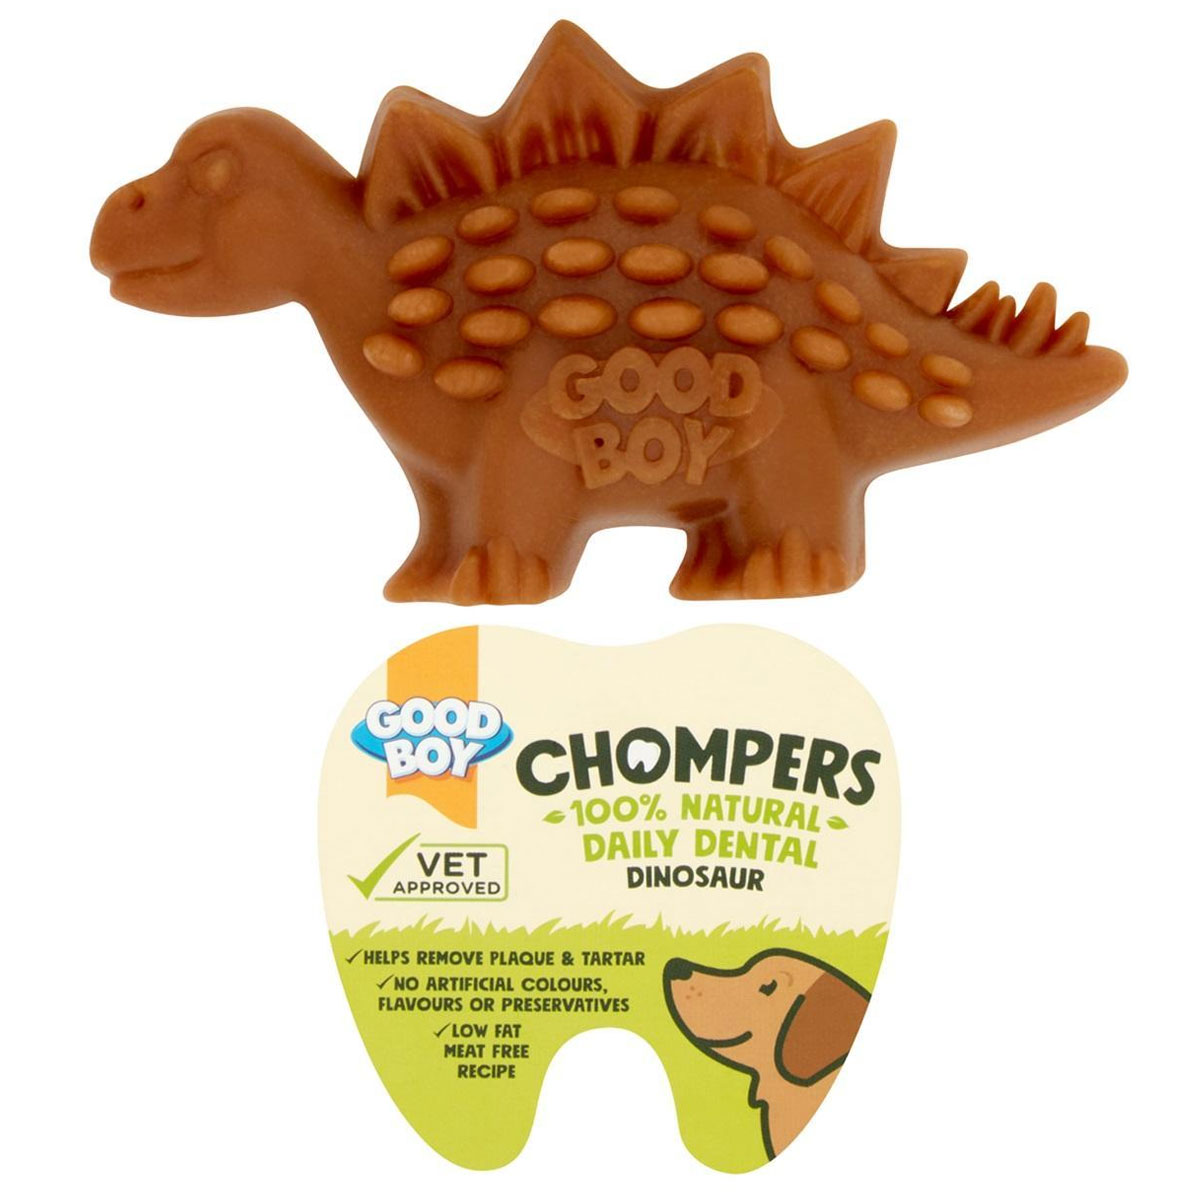 good boy chompers daily dental dino chew dog treat